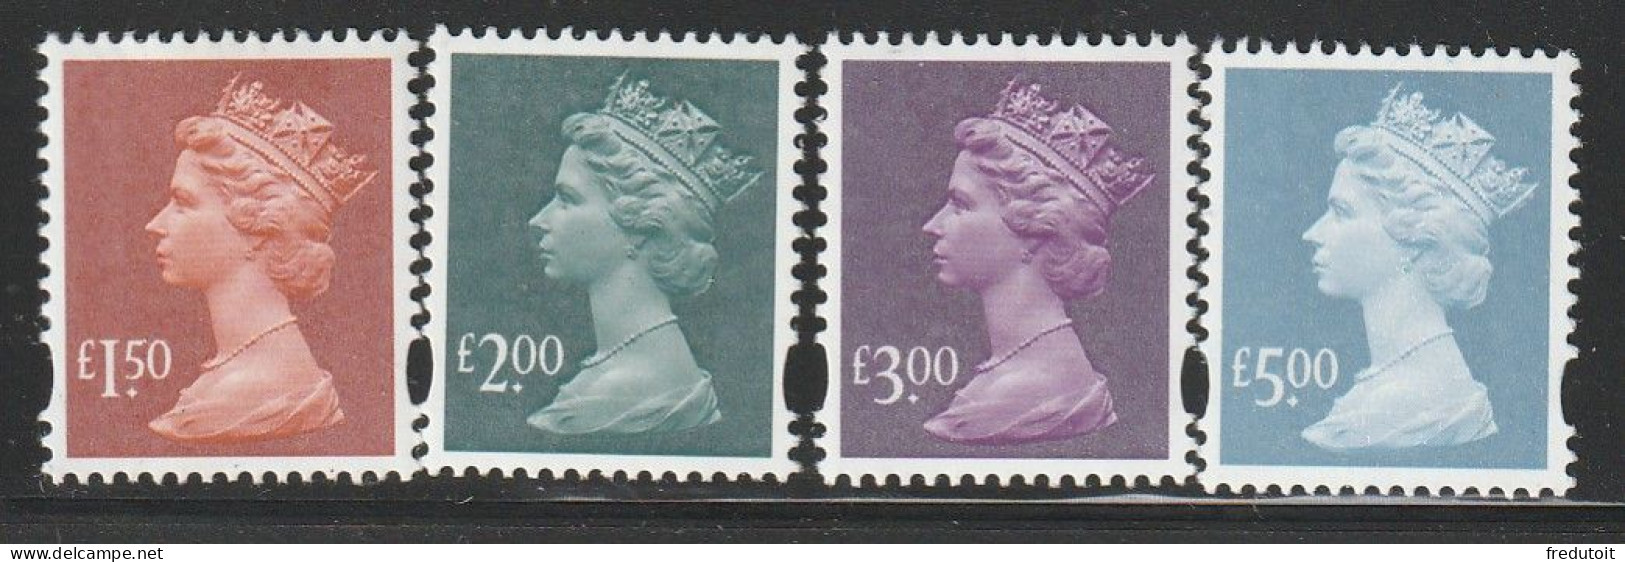 GRANDE BRETAGNE - N°2458/61 ** (2003) Série Courante - Unused Stamps